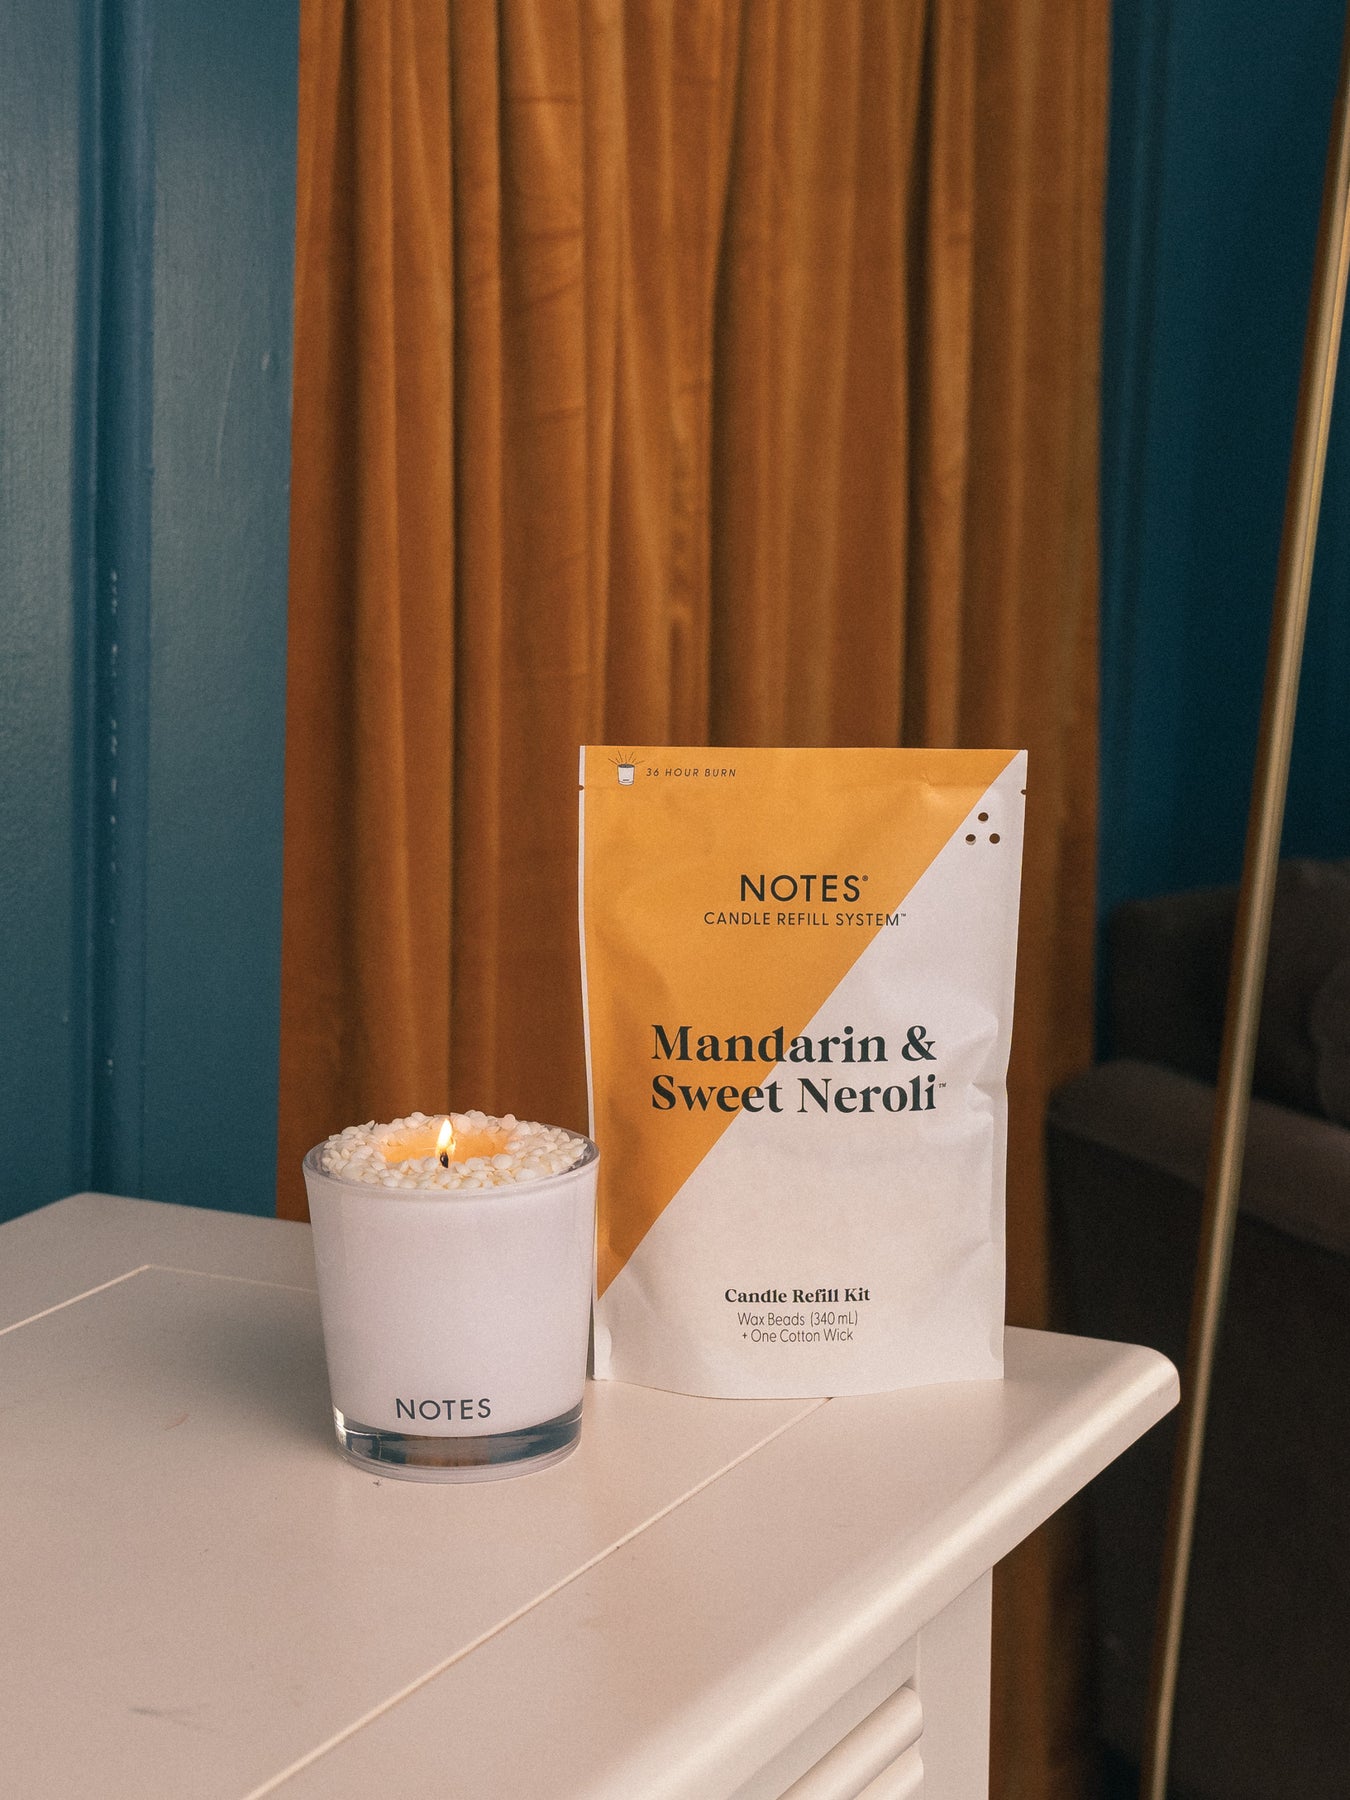 Notes Notes Candle Refill Kit - Mandarin & Sweet Neroli